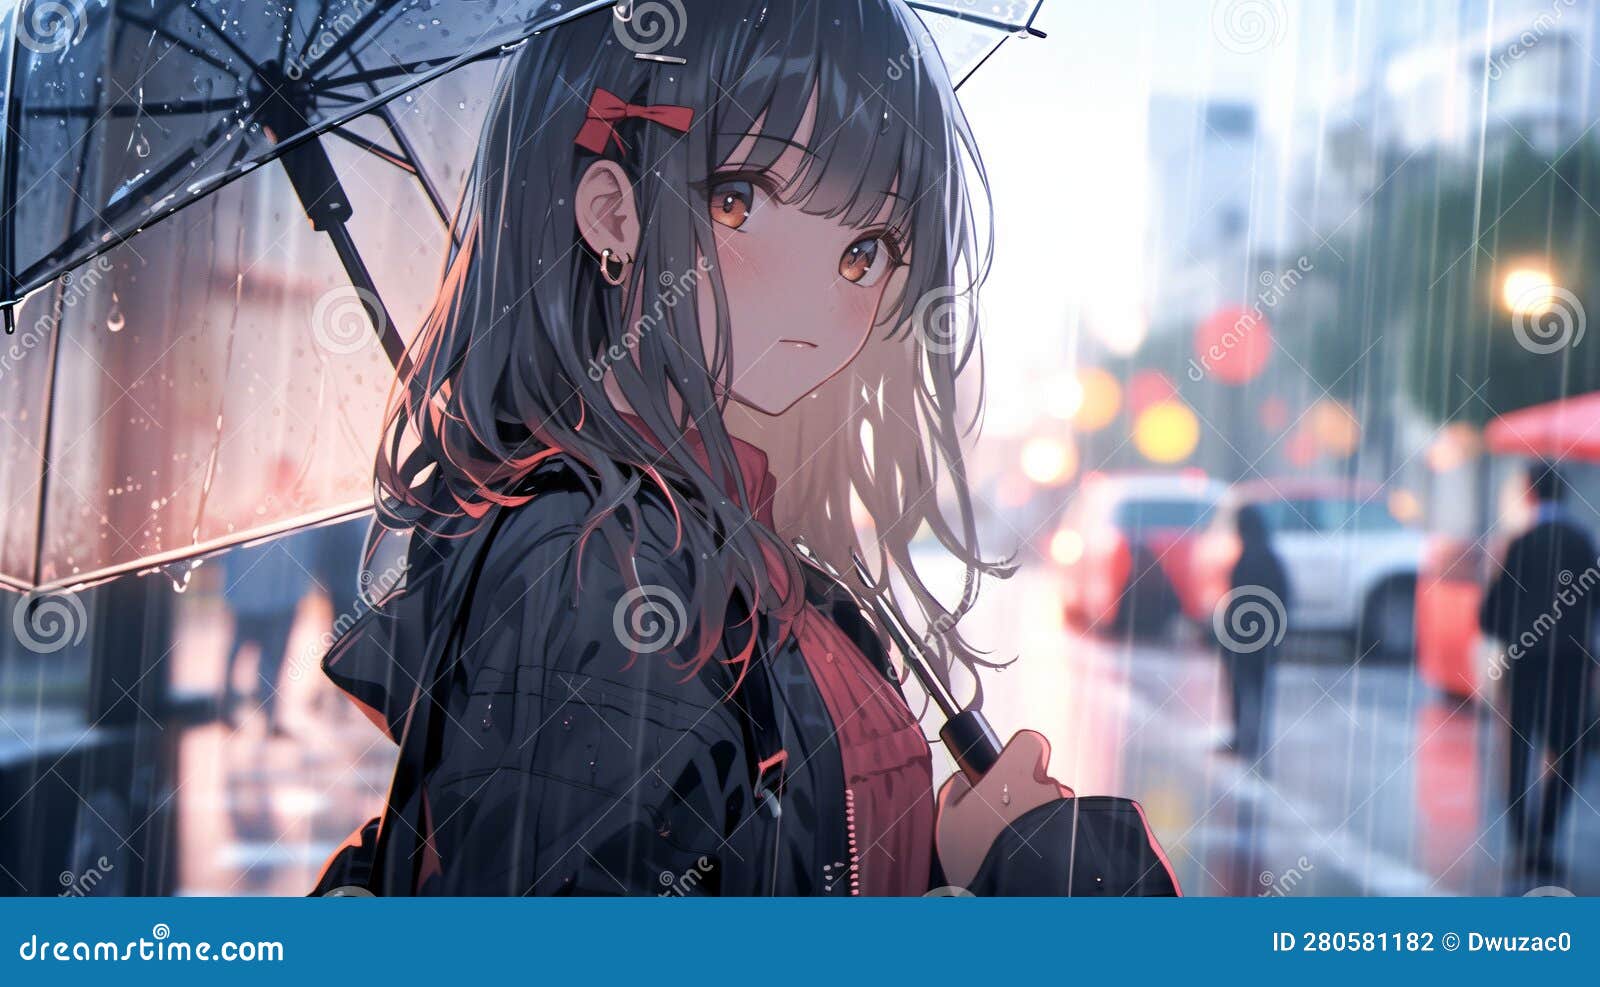 Download wallpaper 1366x768 cute anime girl elf girl in rain art tablet  laptop 1366x768 hd background 27843